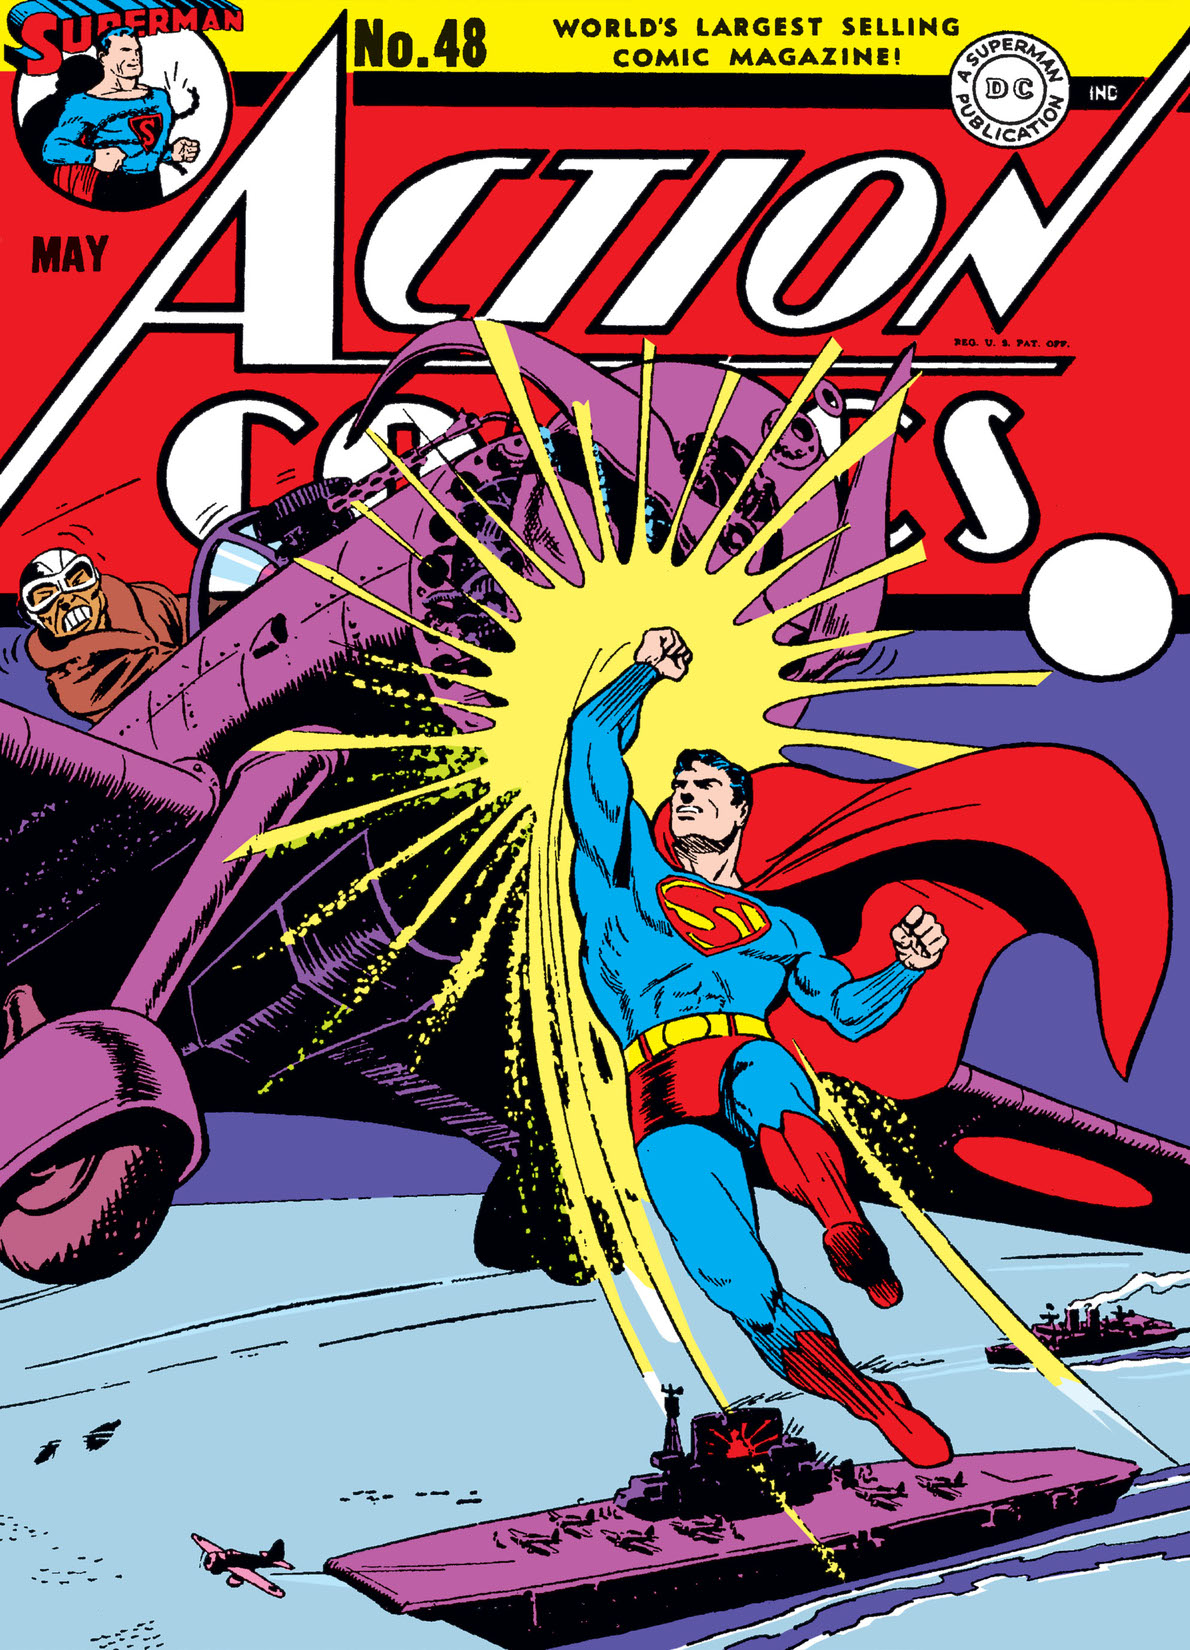 Action Comics (1938-) #48 preview images